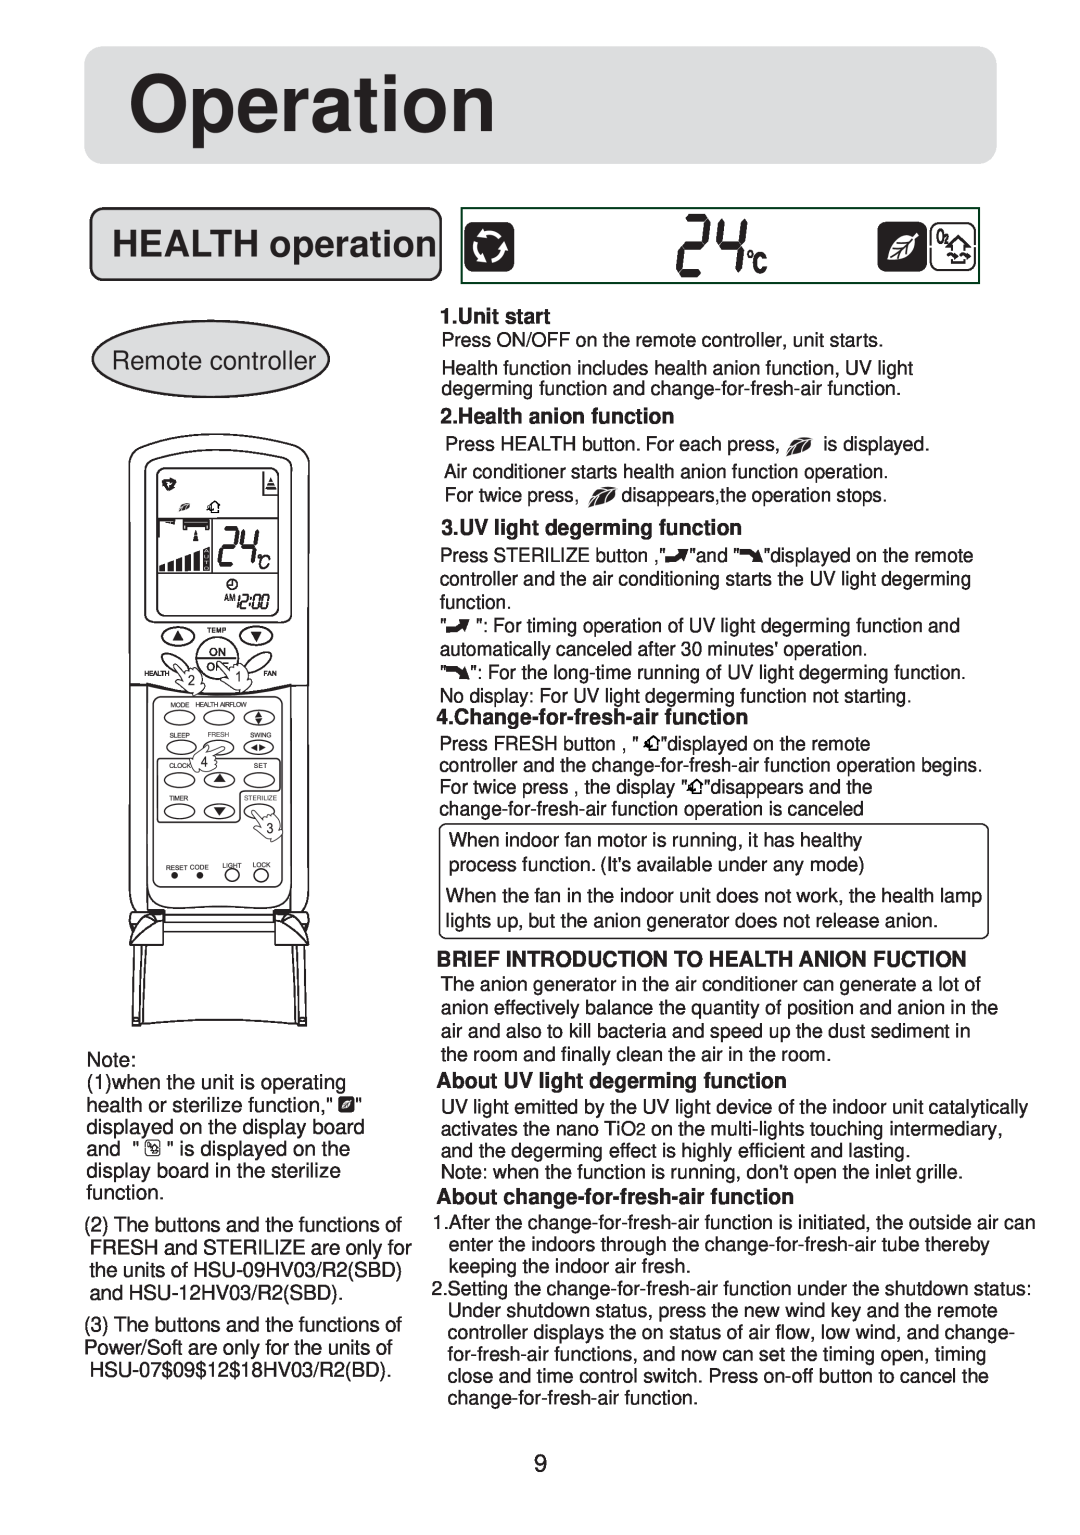 Haier HSU-09HV03/R2(SDB) operation manual Operation, Remote controller, HEALTH operation, Unit start, Health anion function 